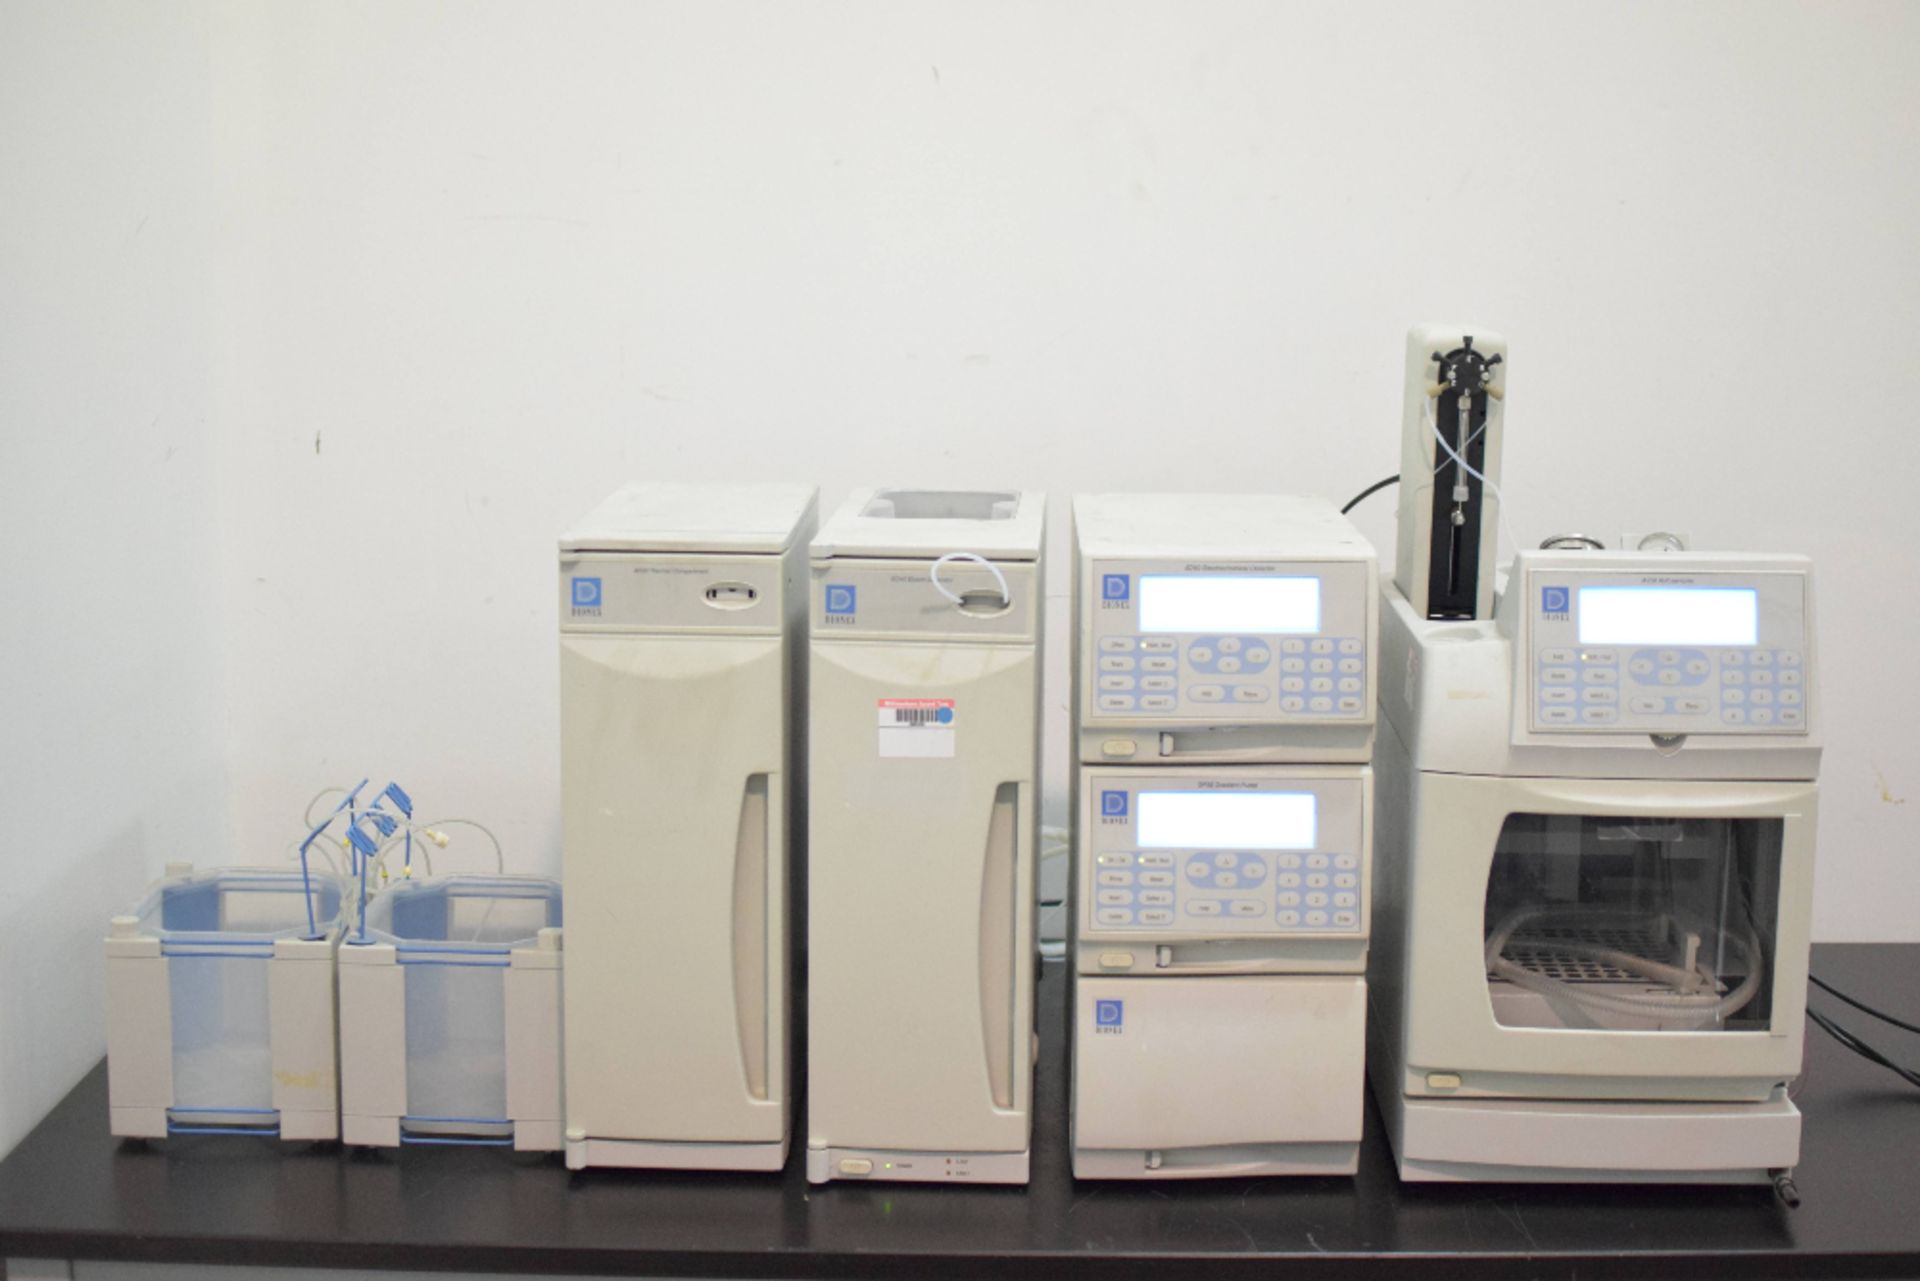 Dionex Ion Chromatography System